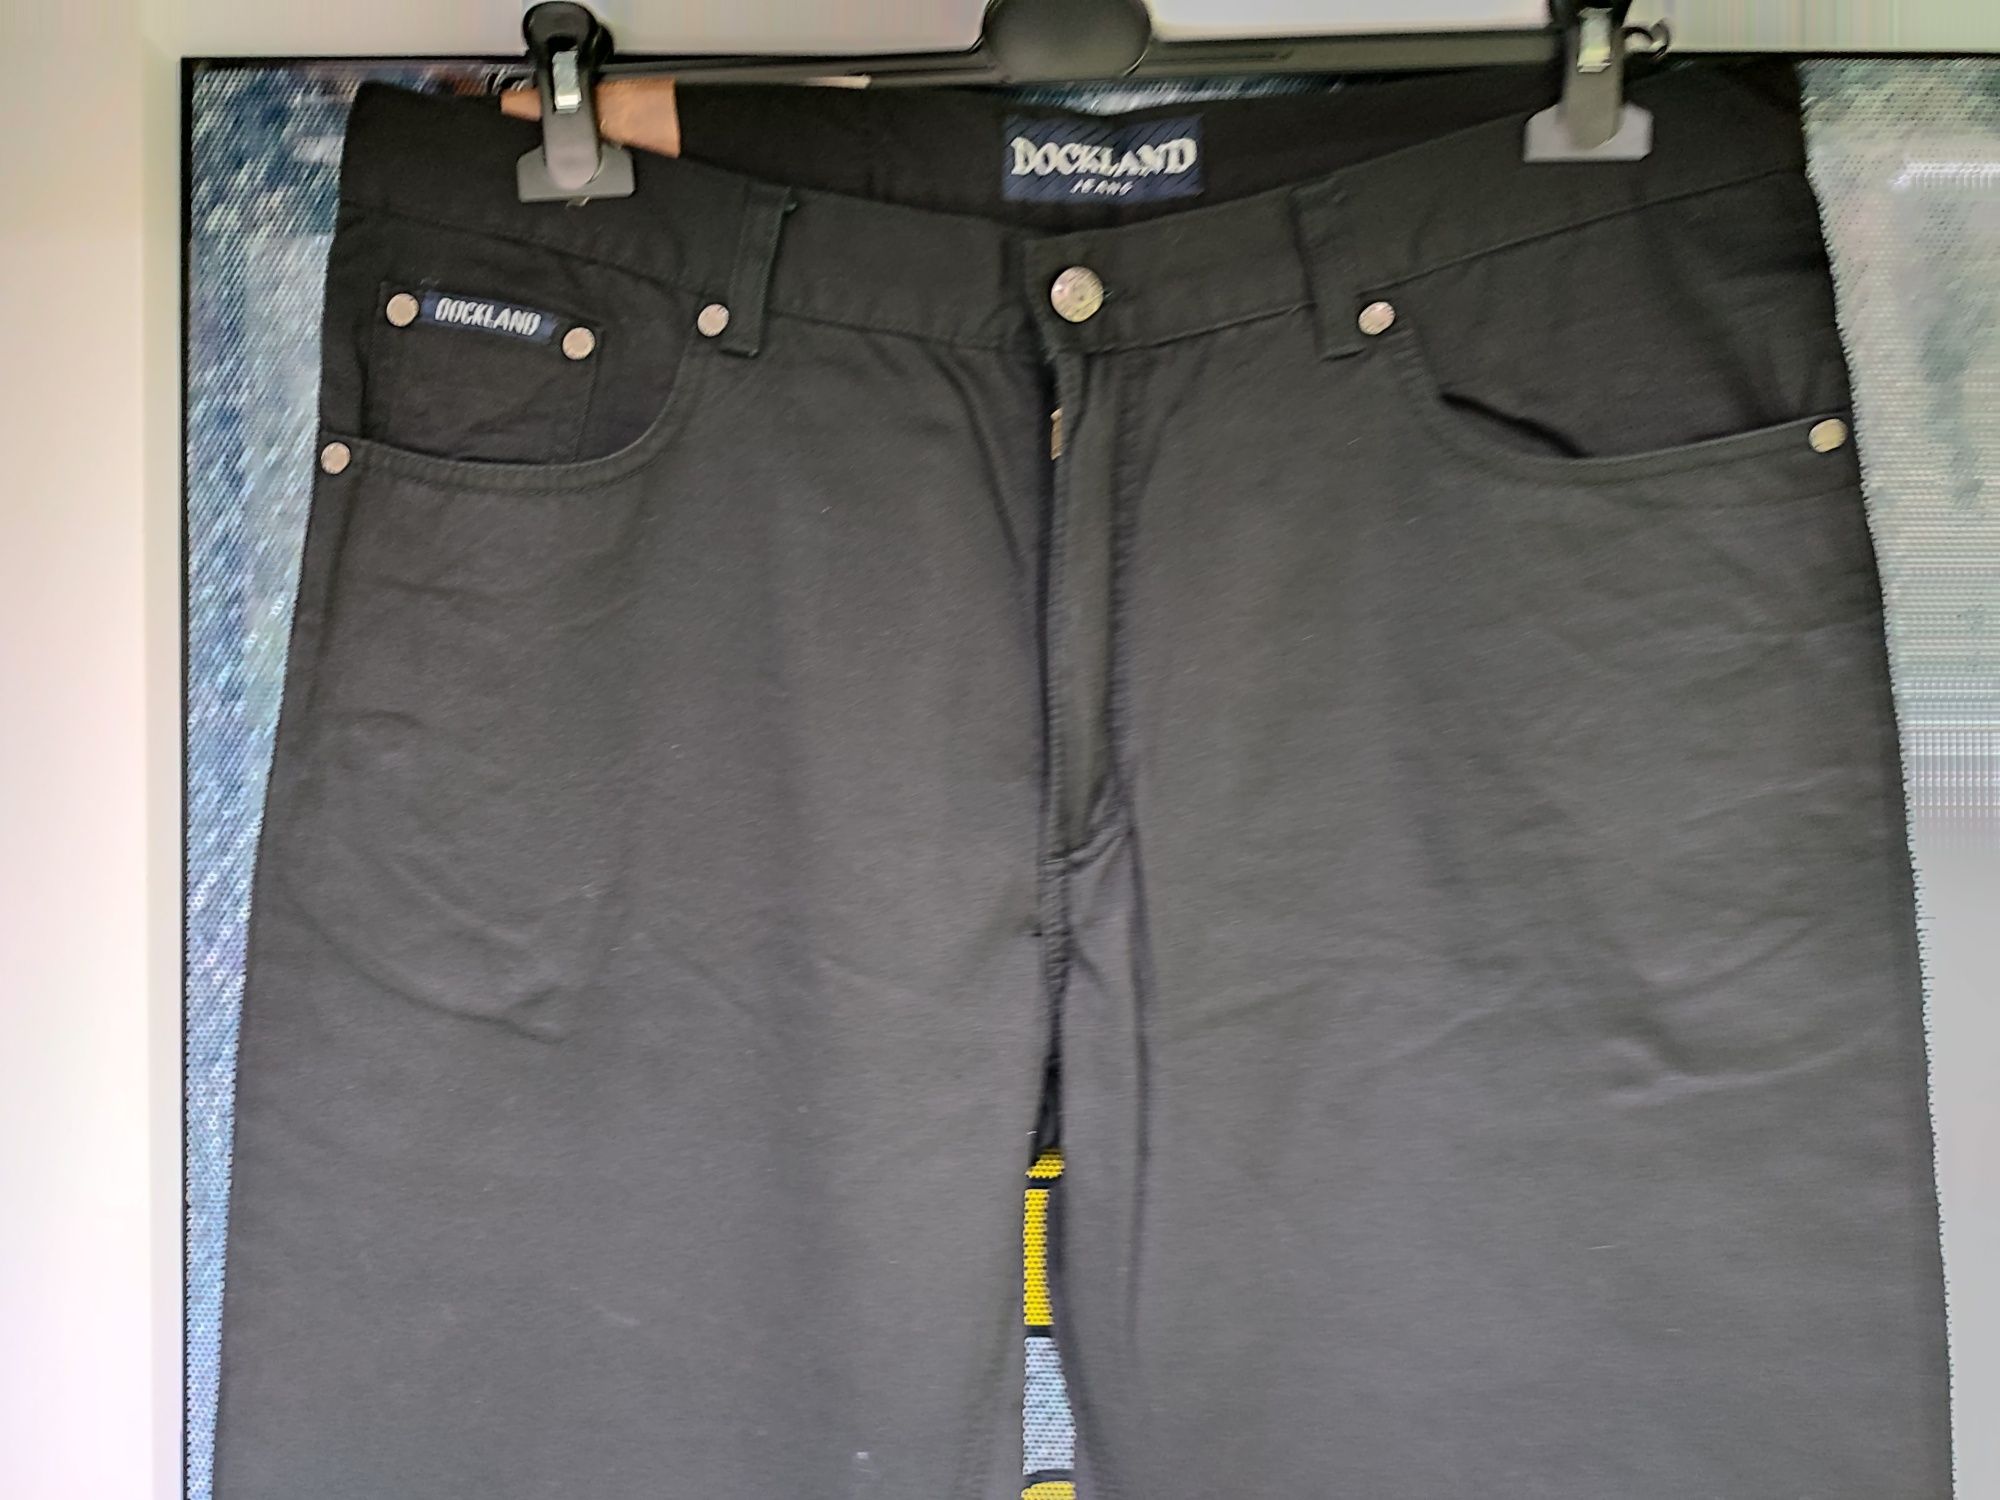 Spodnie męskie jeansy ocieplane